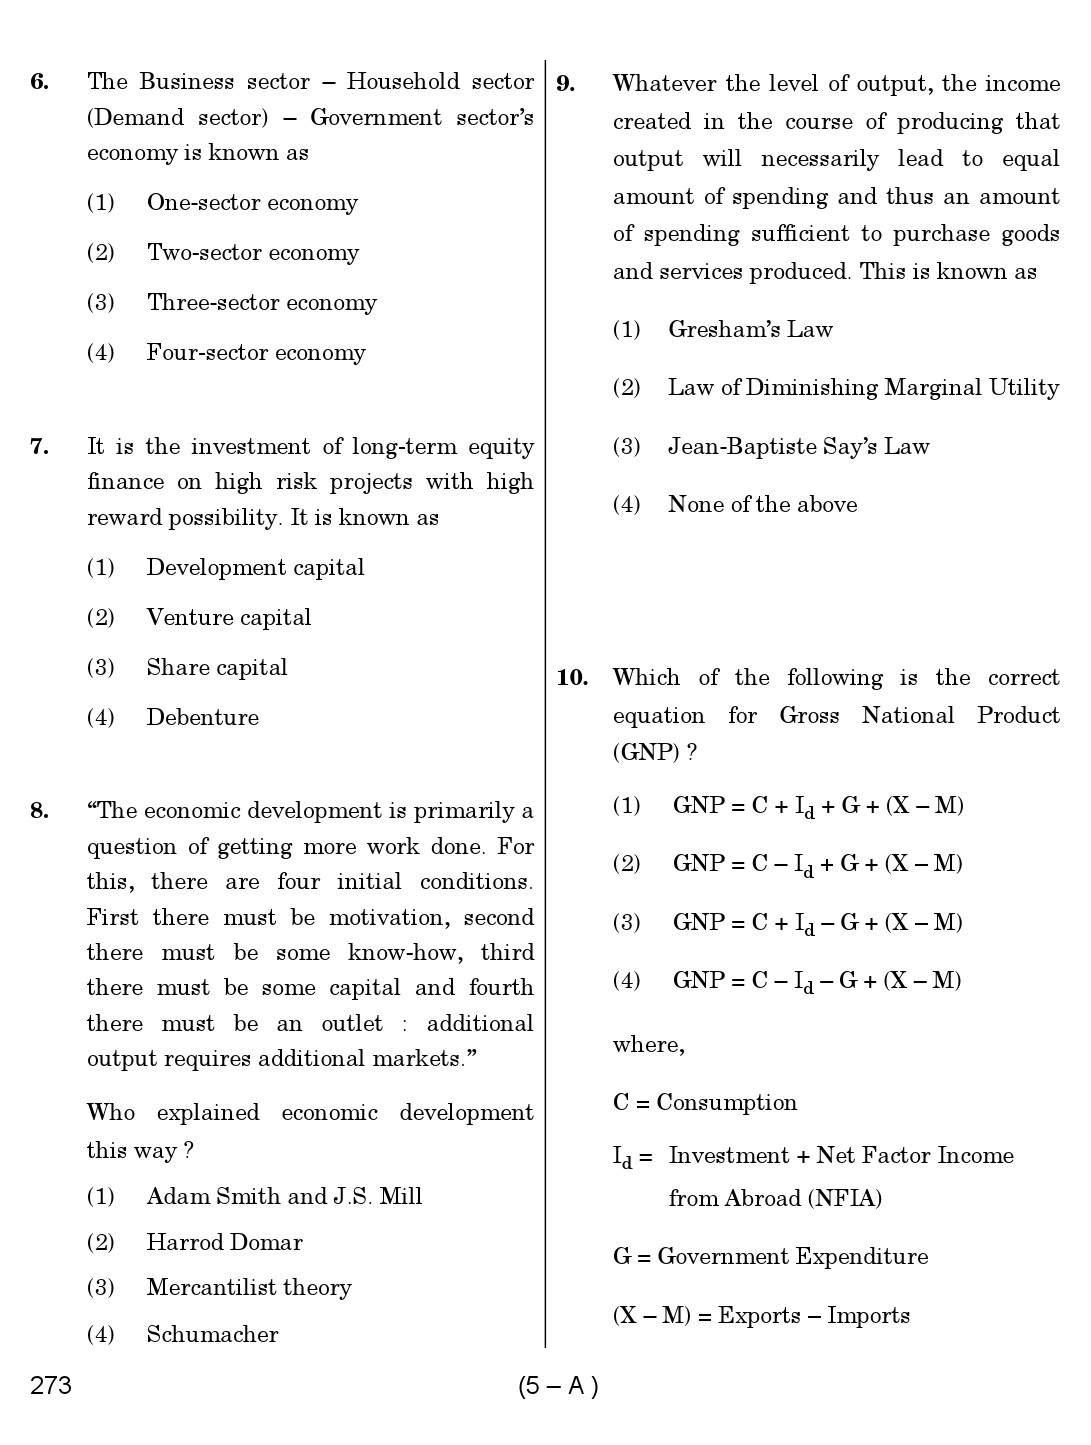 Karnataka PSC Social Science Teacher Exam Sample Question Paper Subject code 273 5